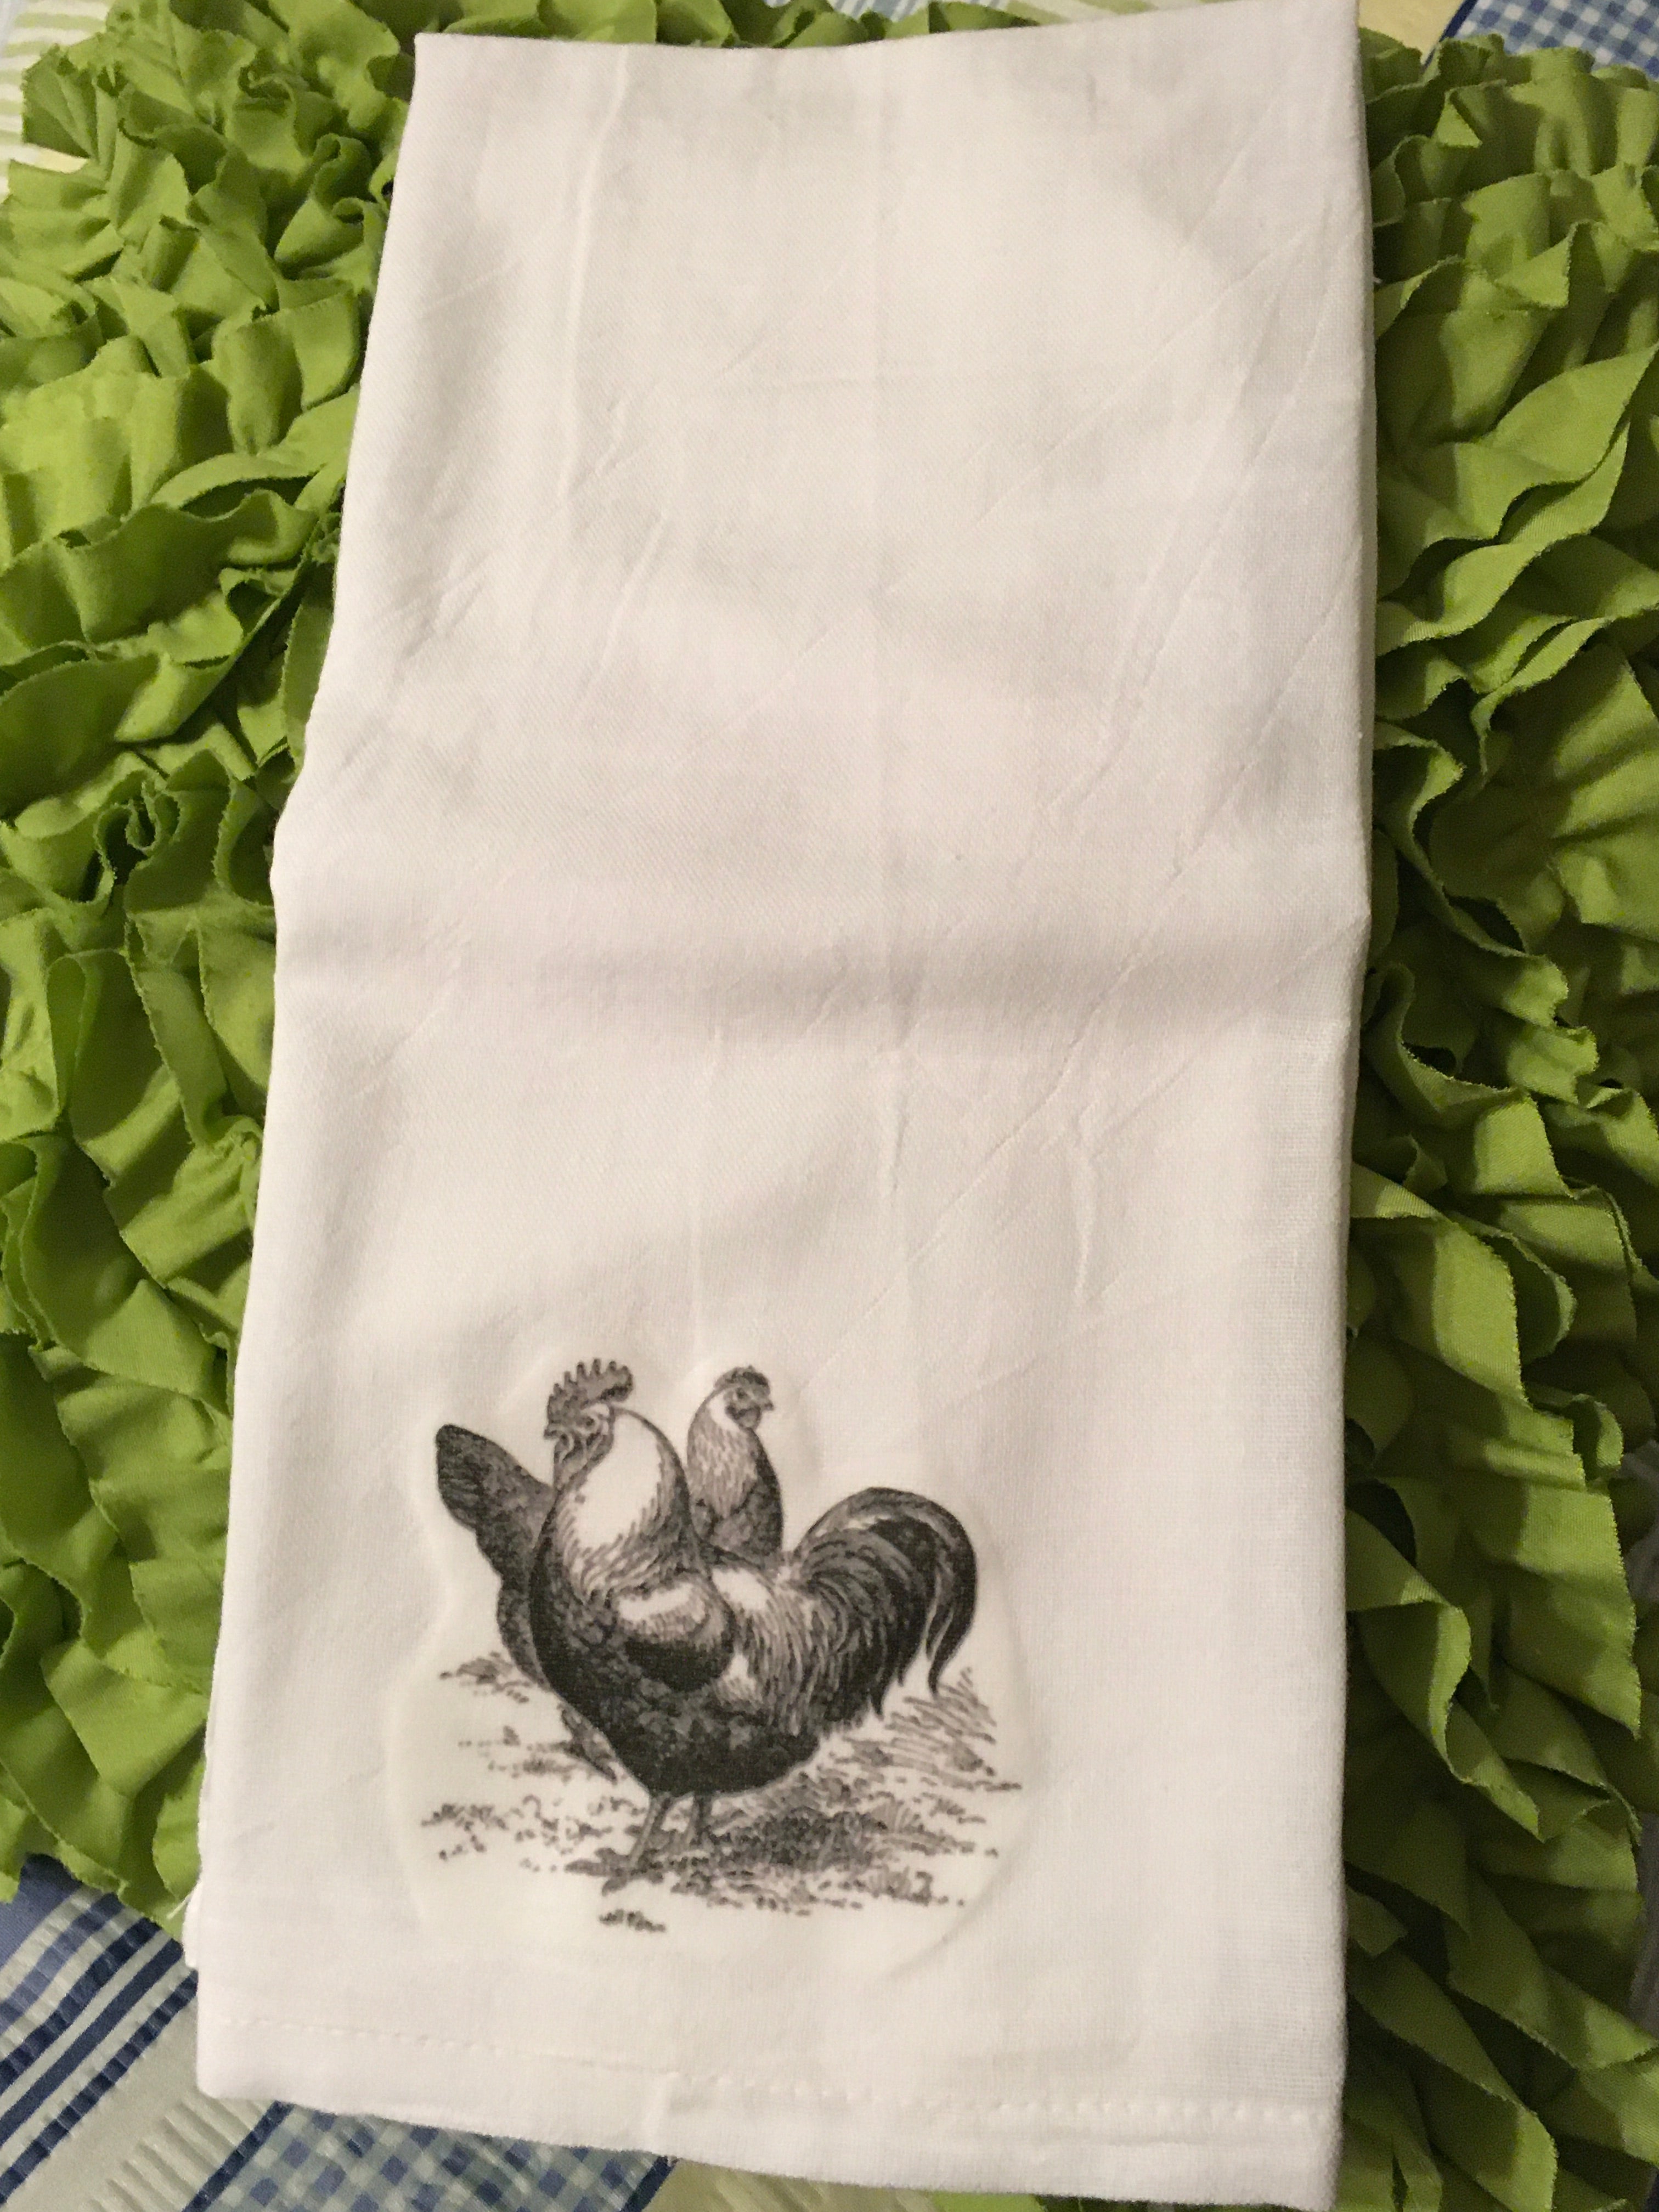 4 CHICKENS Flour Sack Decorative Tea Dish Towels Gift Kitchen